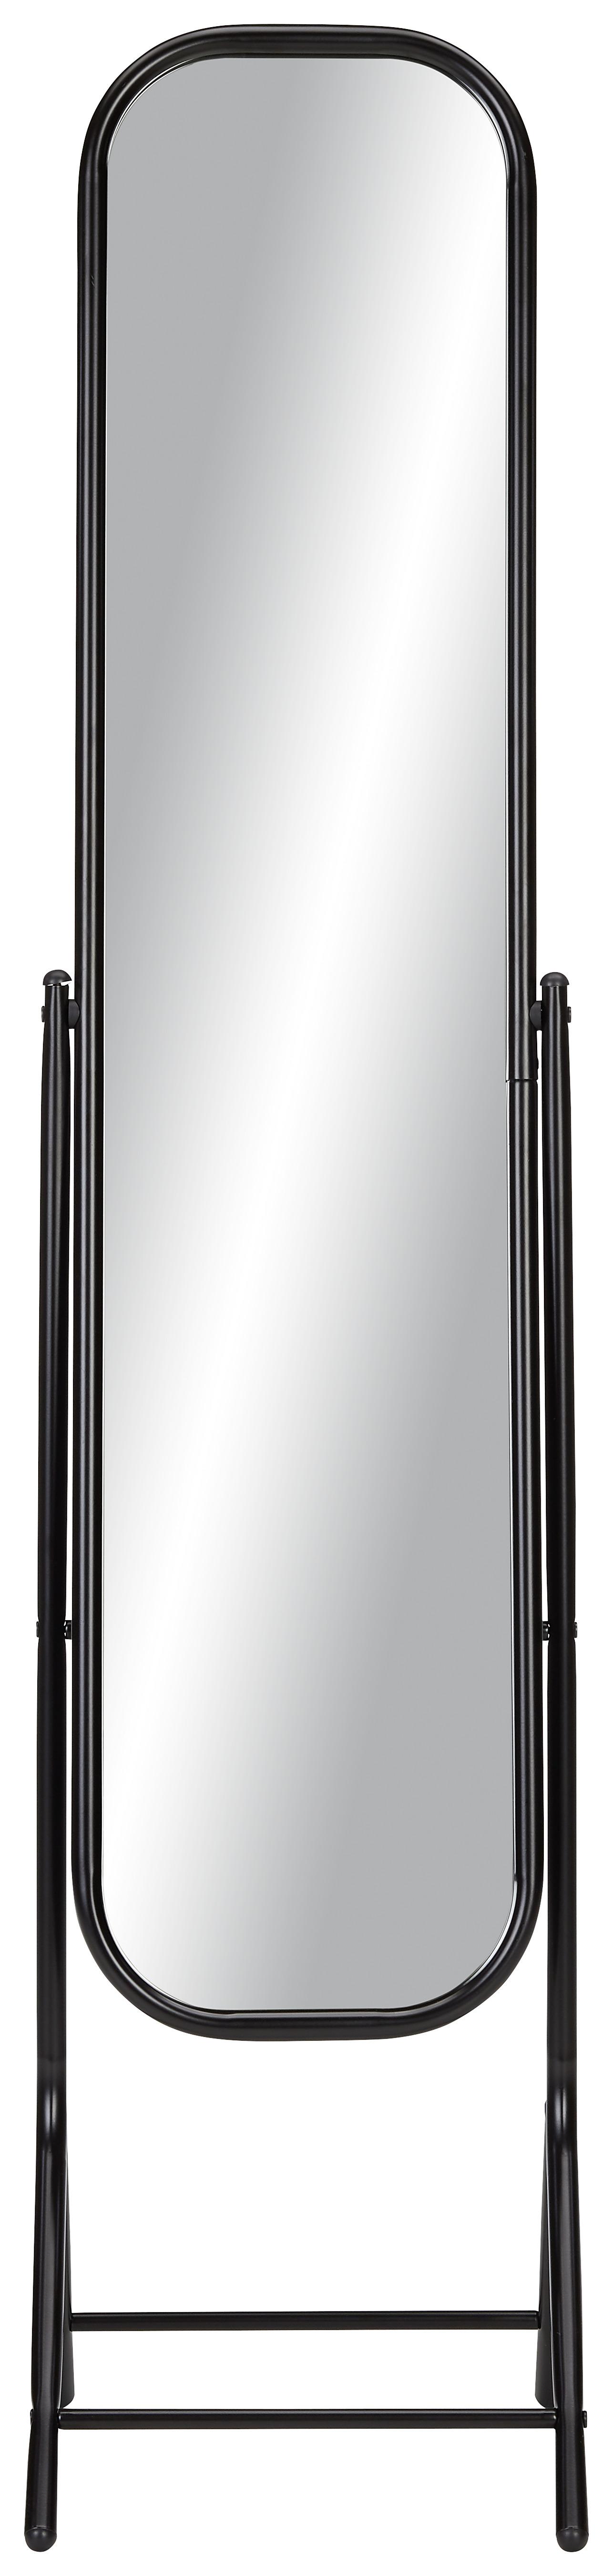 Stojací Zrcadlo Romeo - černá, Moderní, kov/sklo (41/149/33cm) - Modern Living